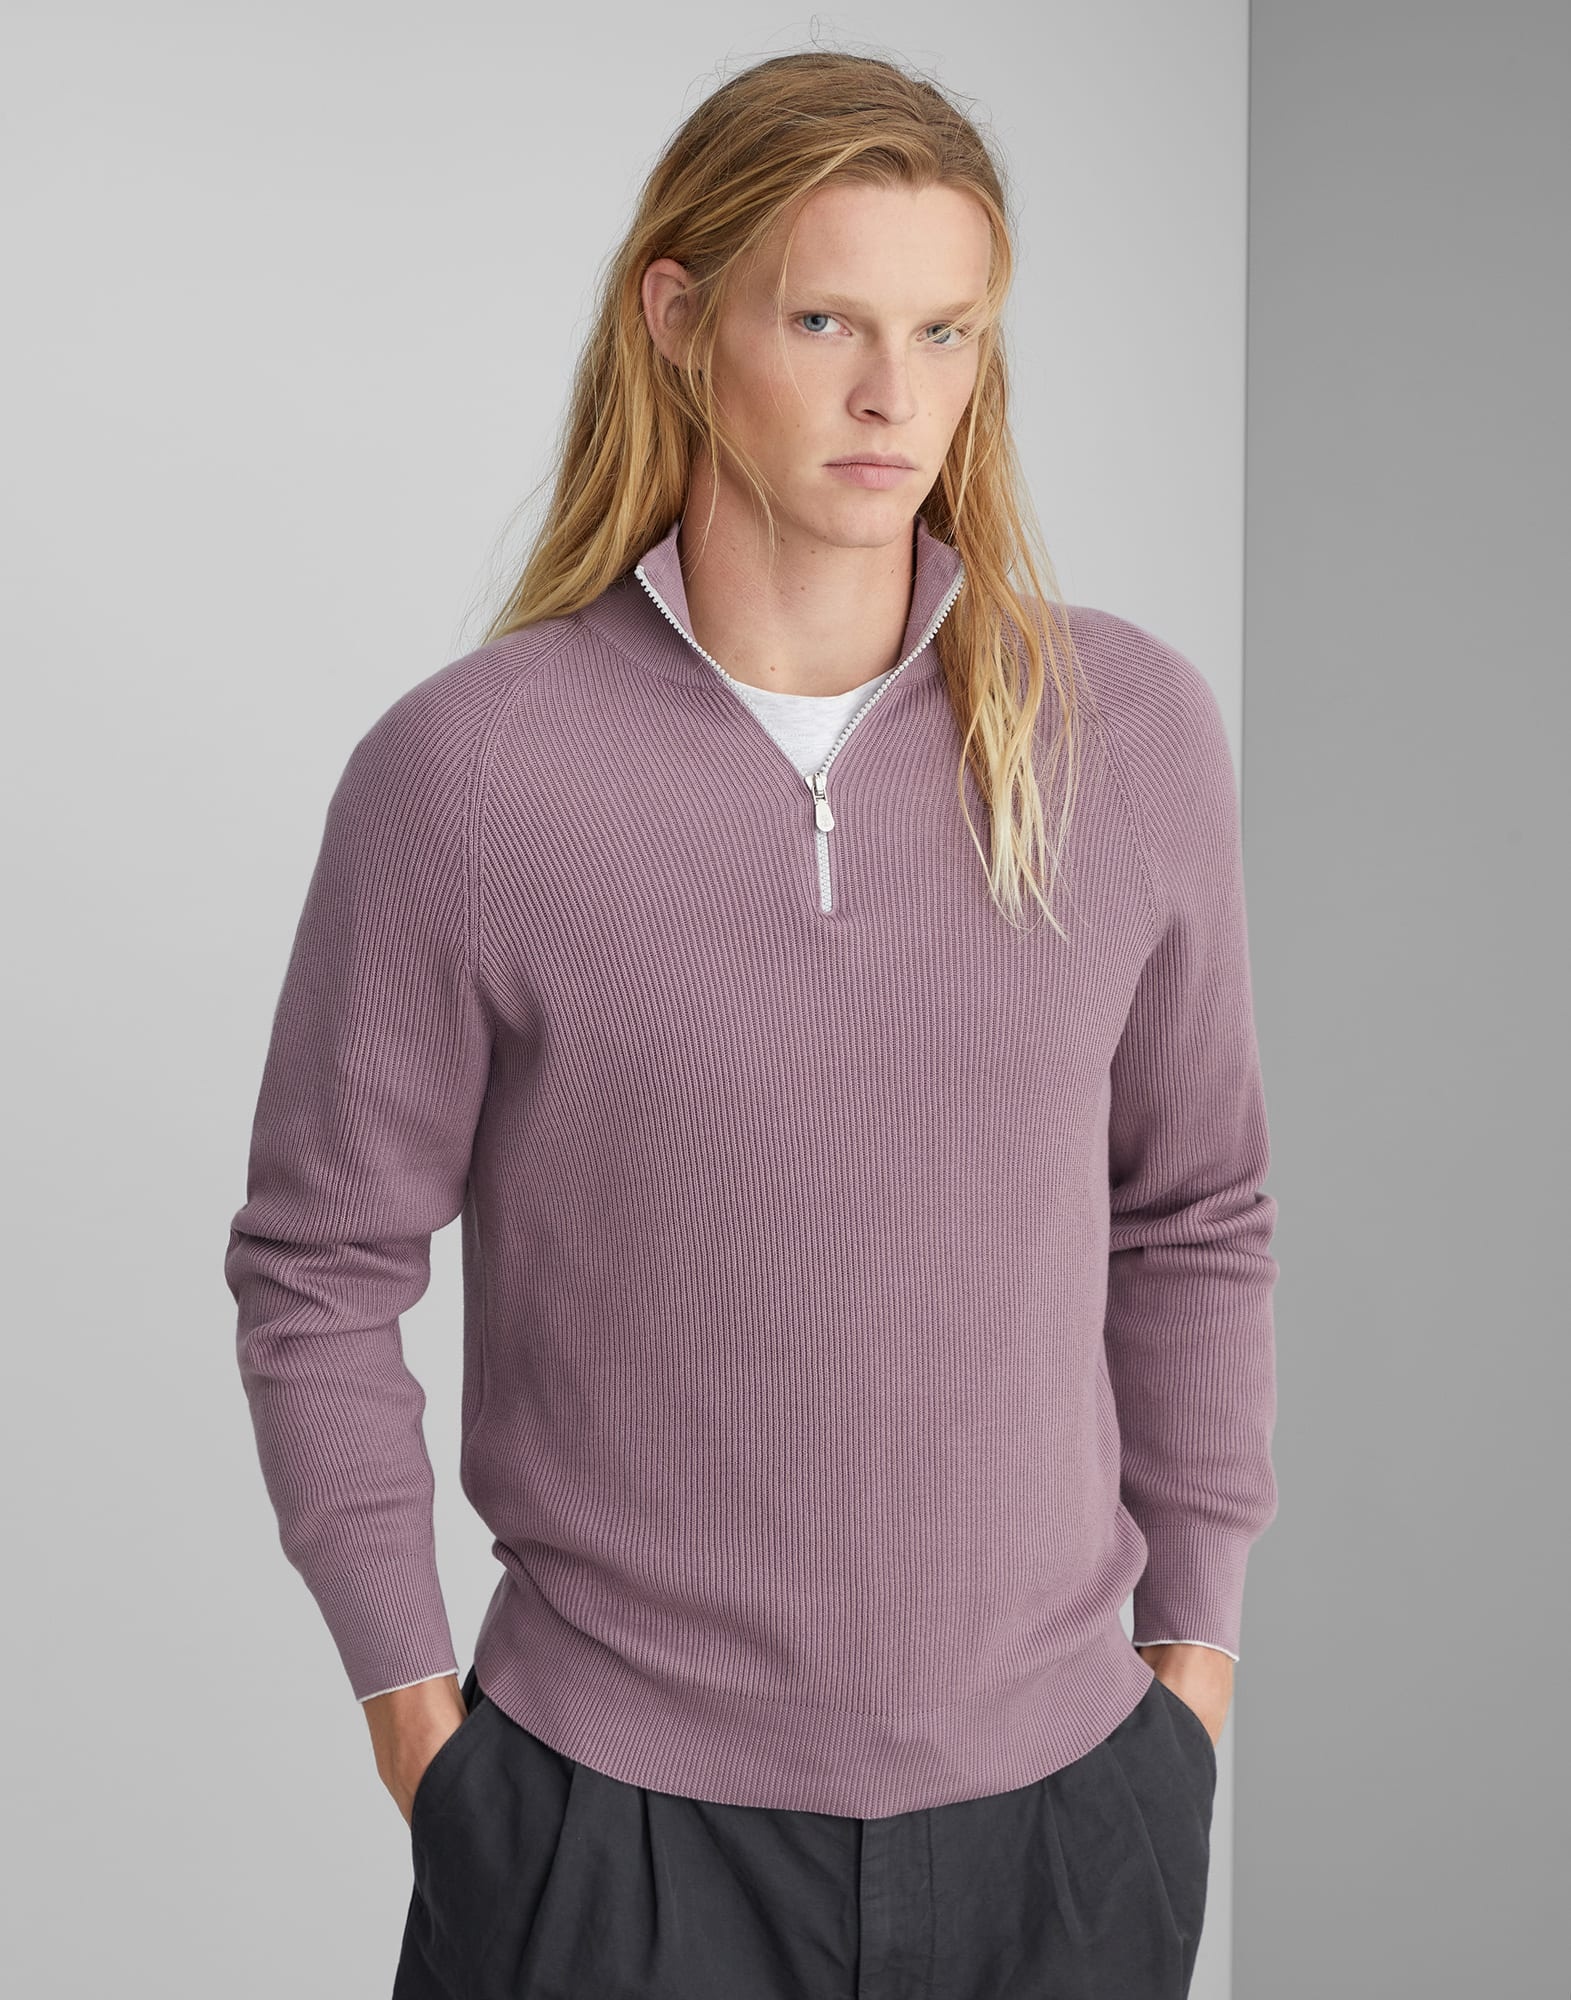 Brunello Cucinelli fine-knit cashmere jumper - Purple